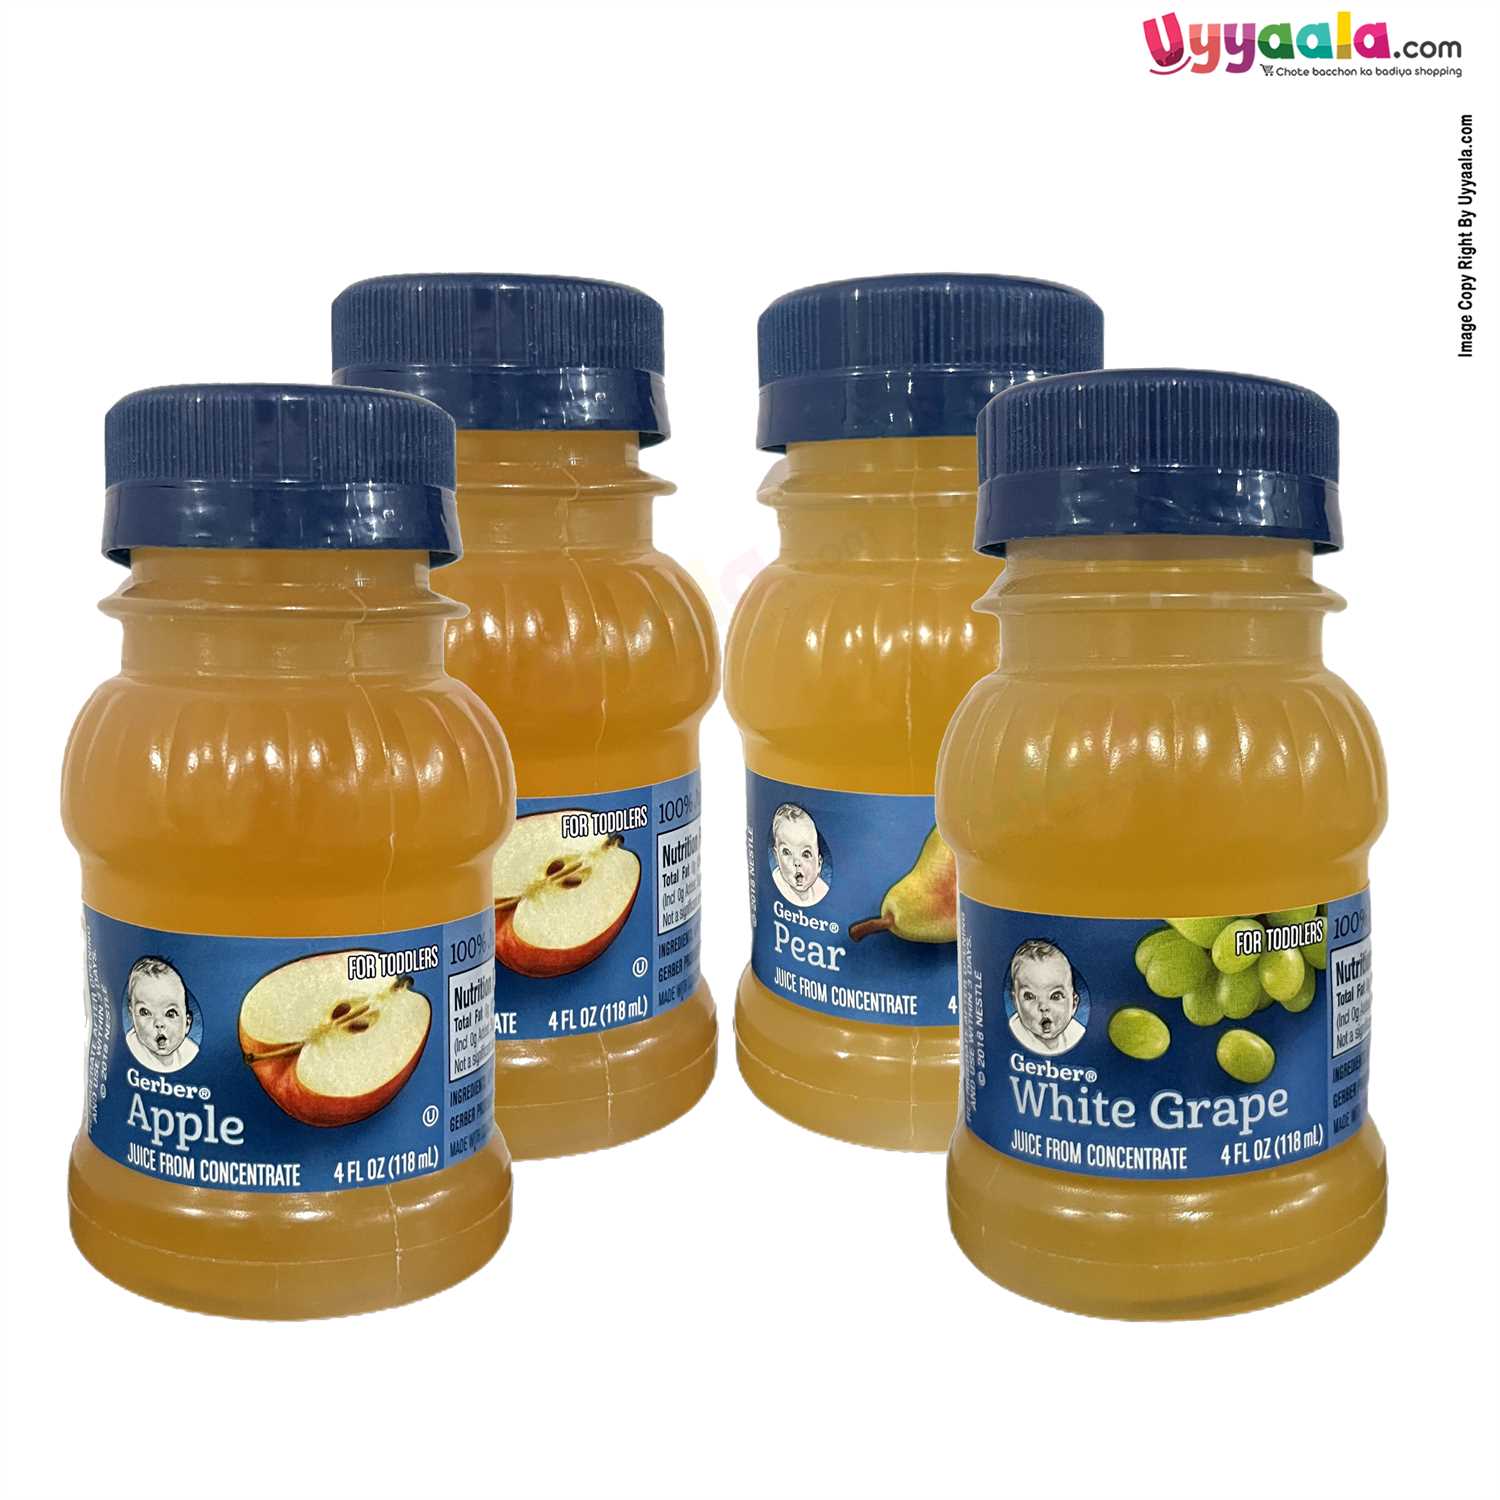 GERBER Fruit Juices Variety Pack, 2 Apple 1 Pear 1 White Grape - Pack of 4, 118ml Each 12m+